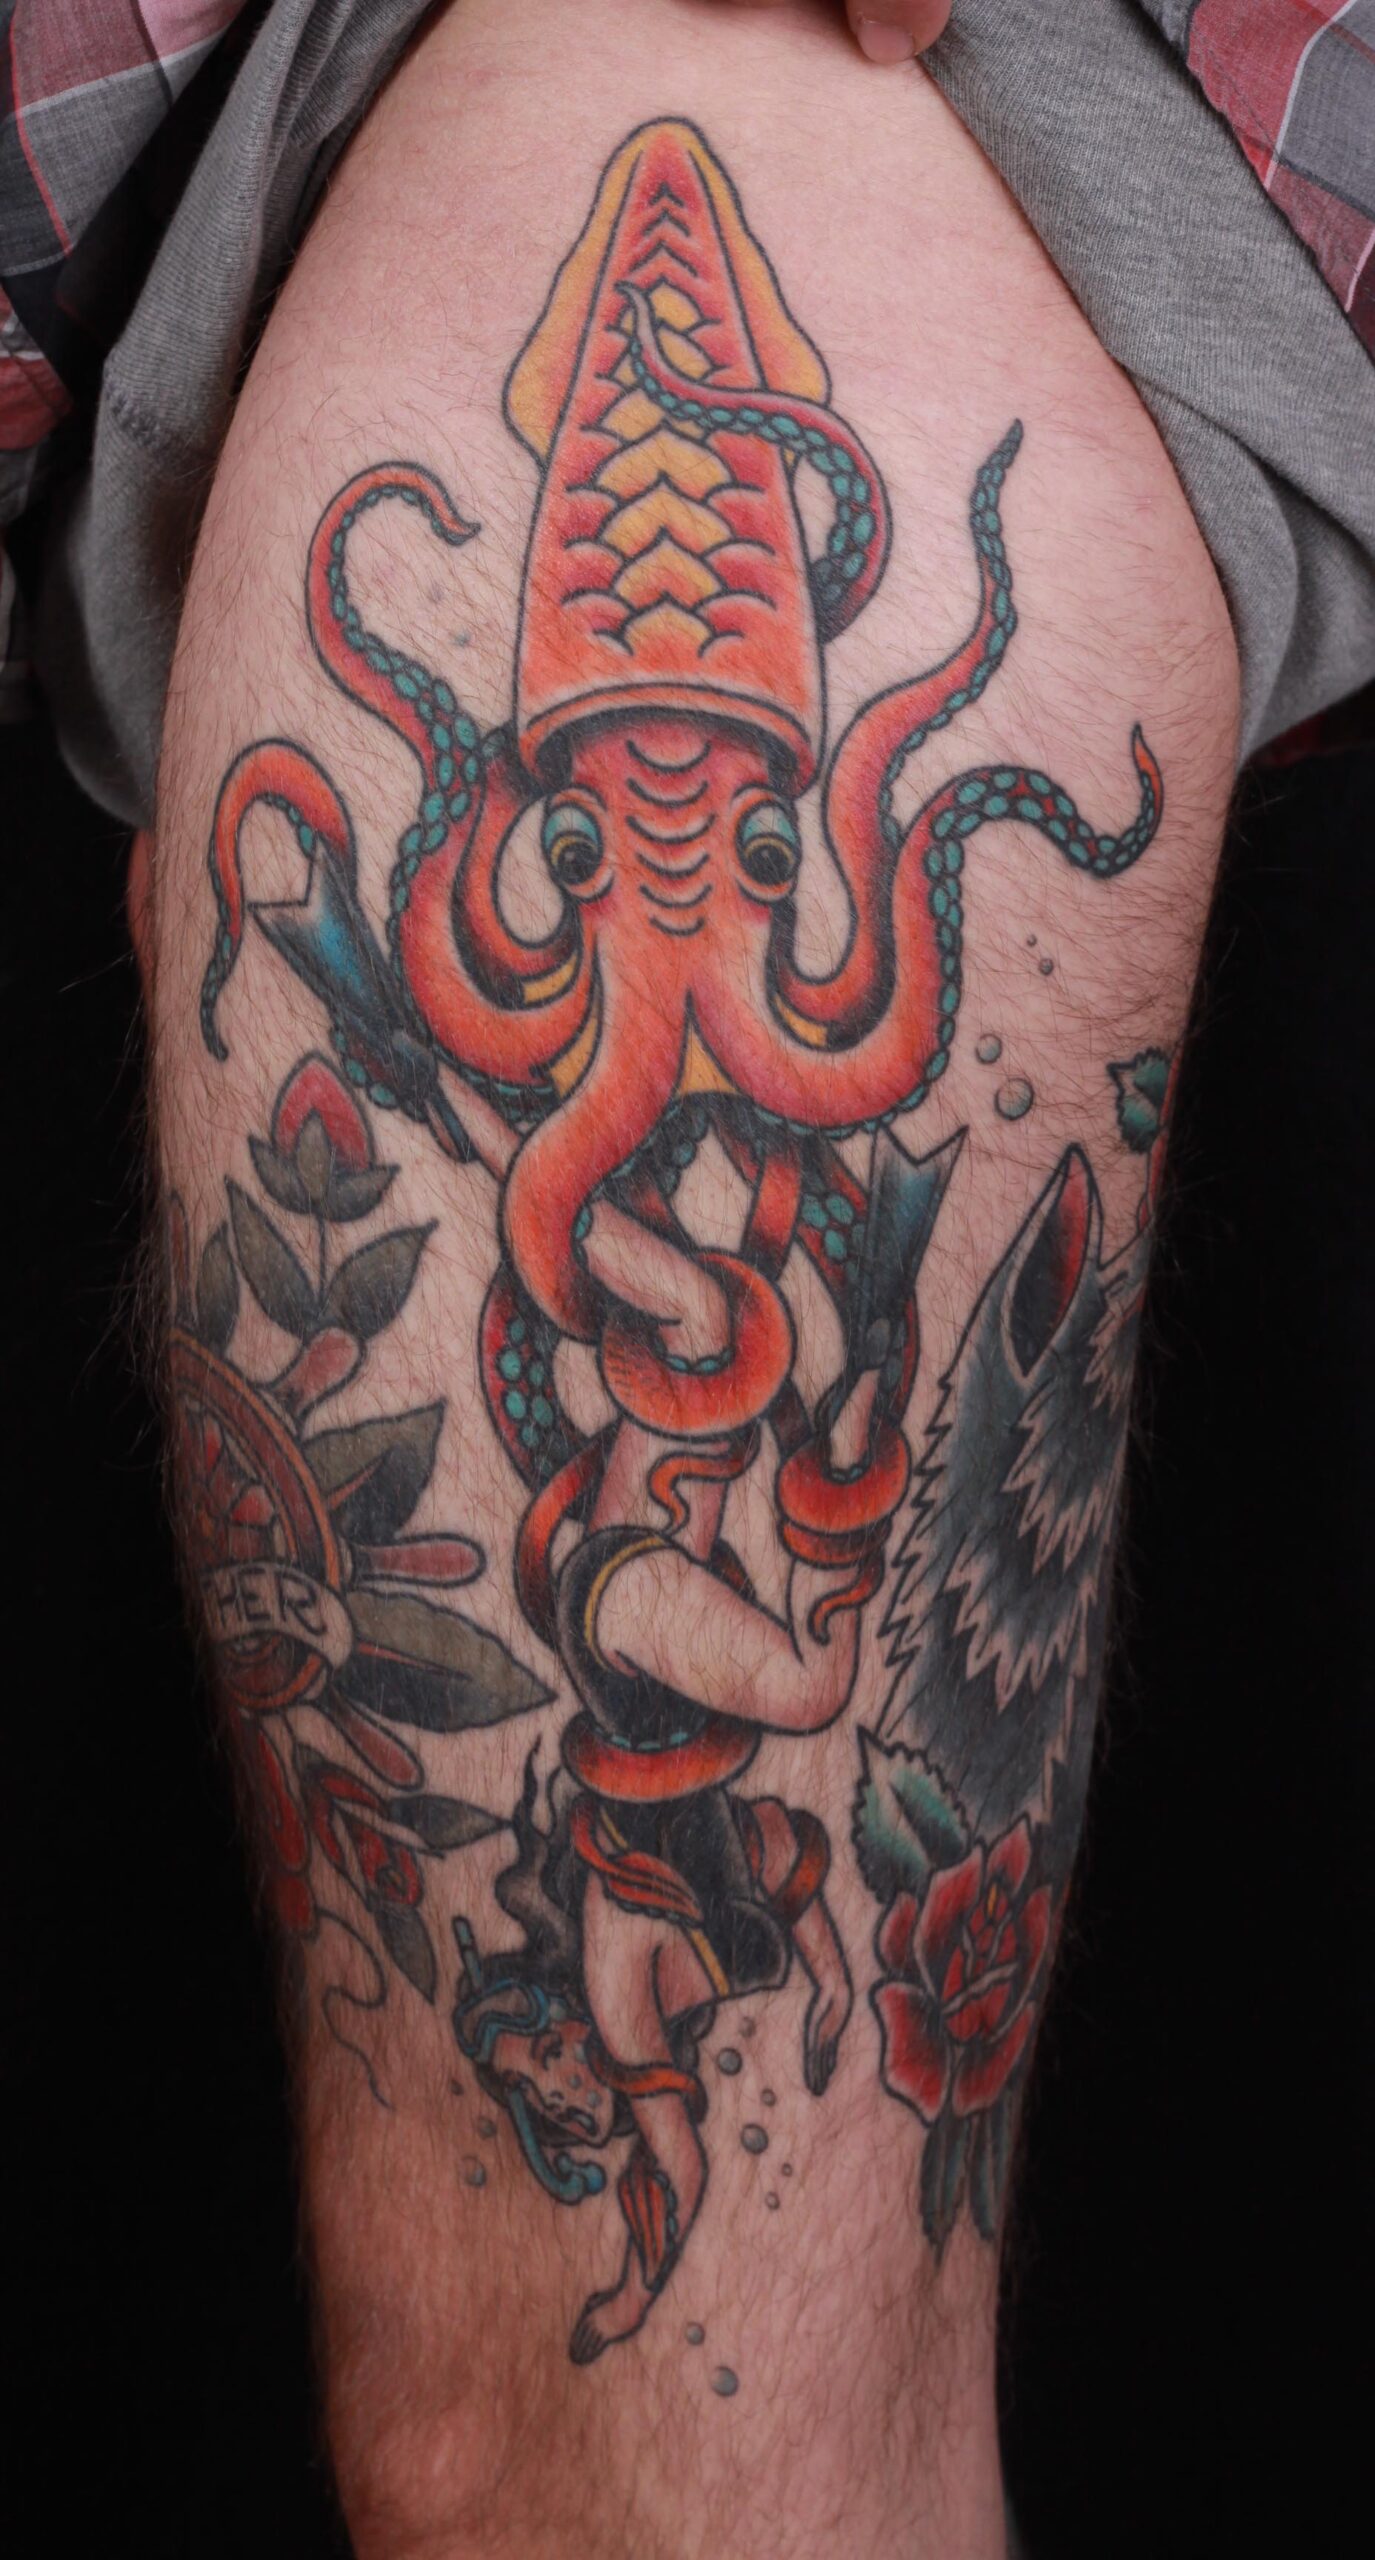 brian-thurow-dedication-tattoo-squid-diver-thigh-traditional